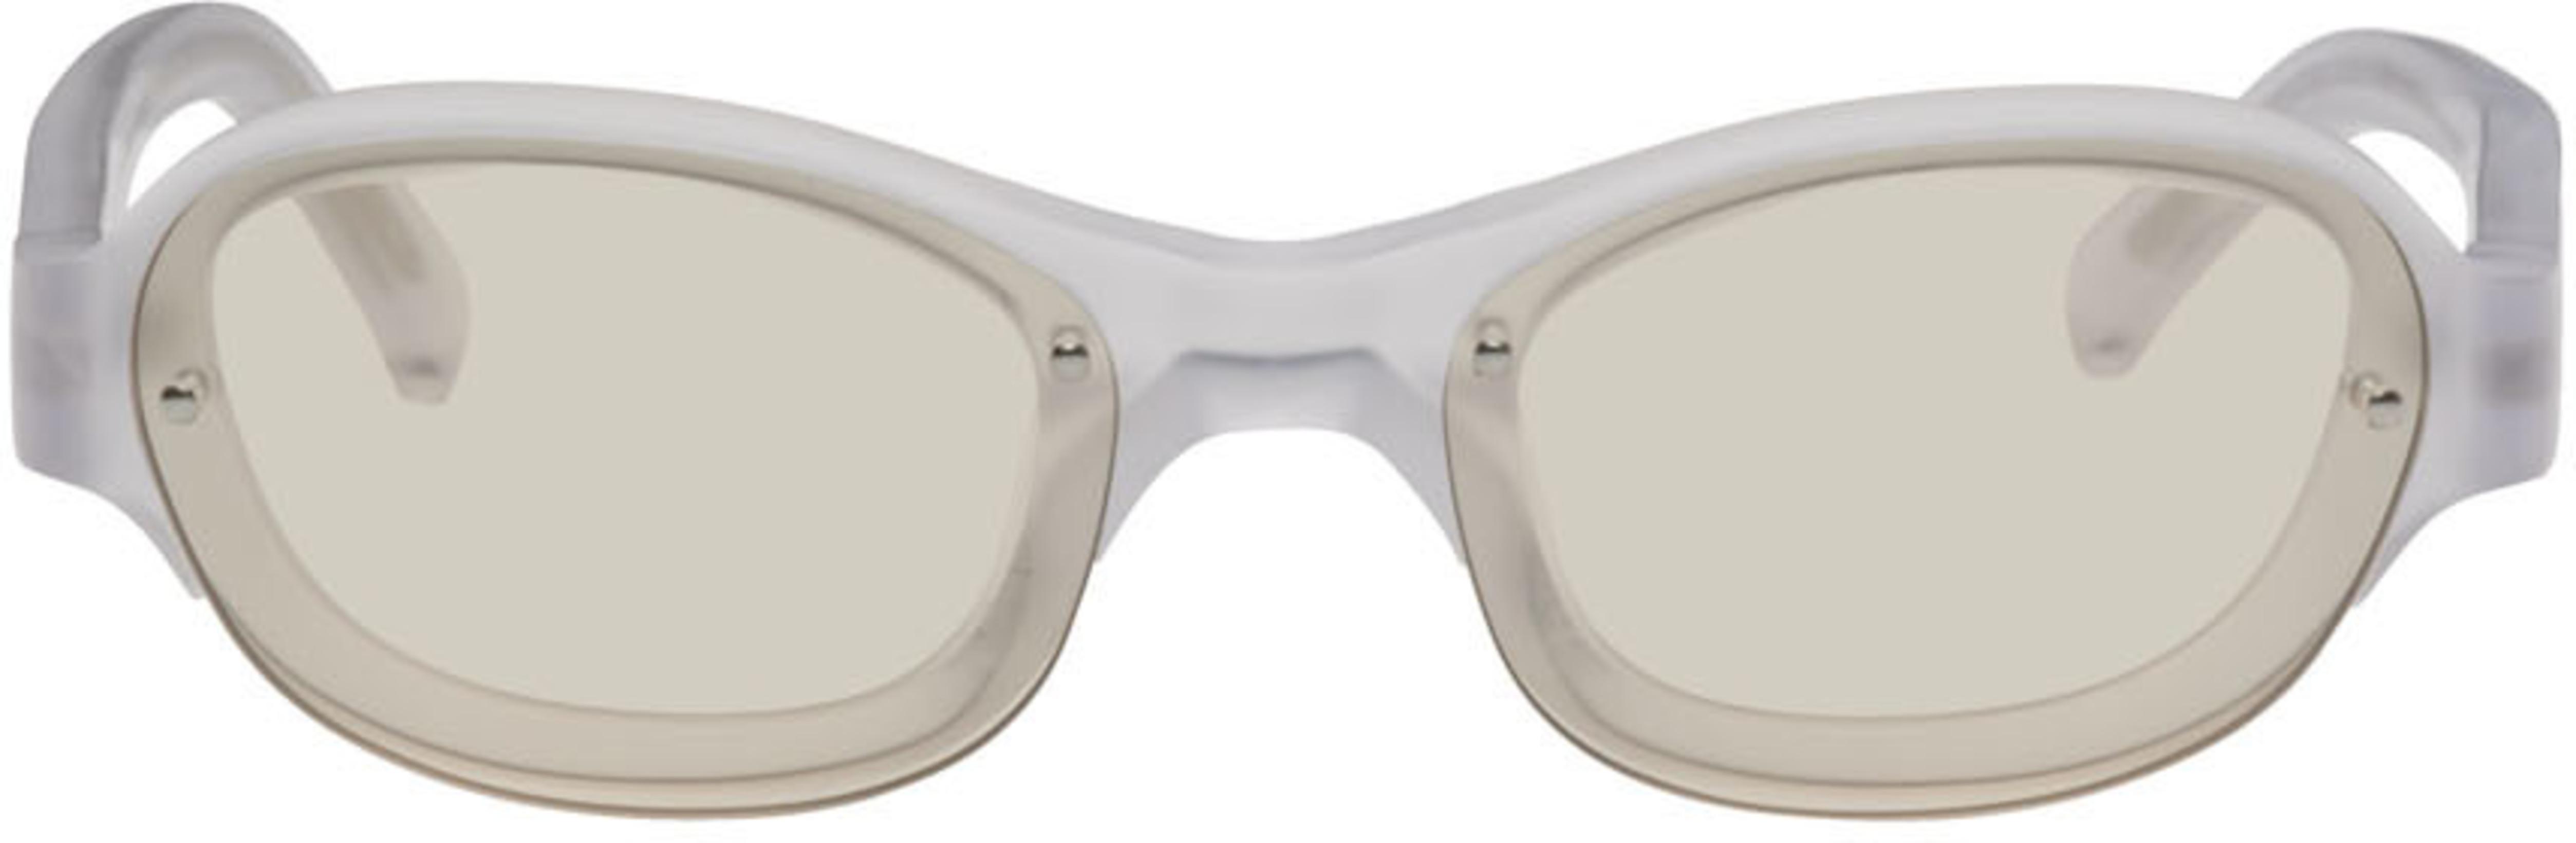 SSENSE Exclusive Gray & Beige Skye Sunglasses by A BETTER FEELING